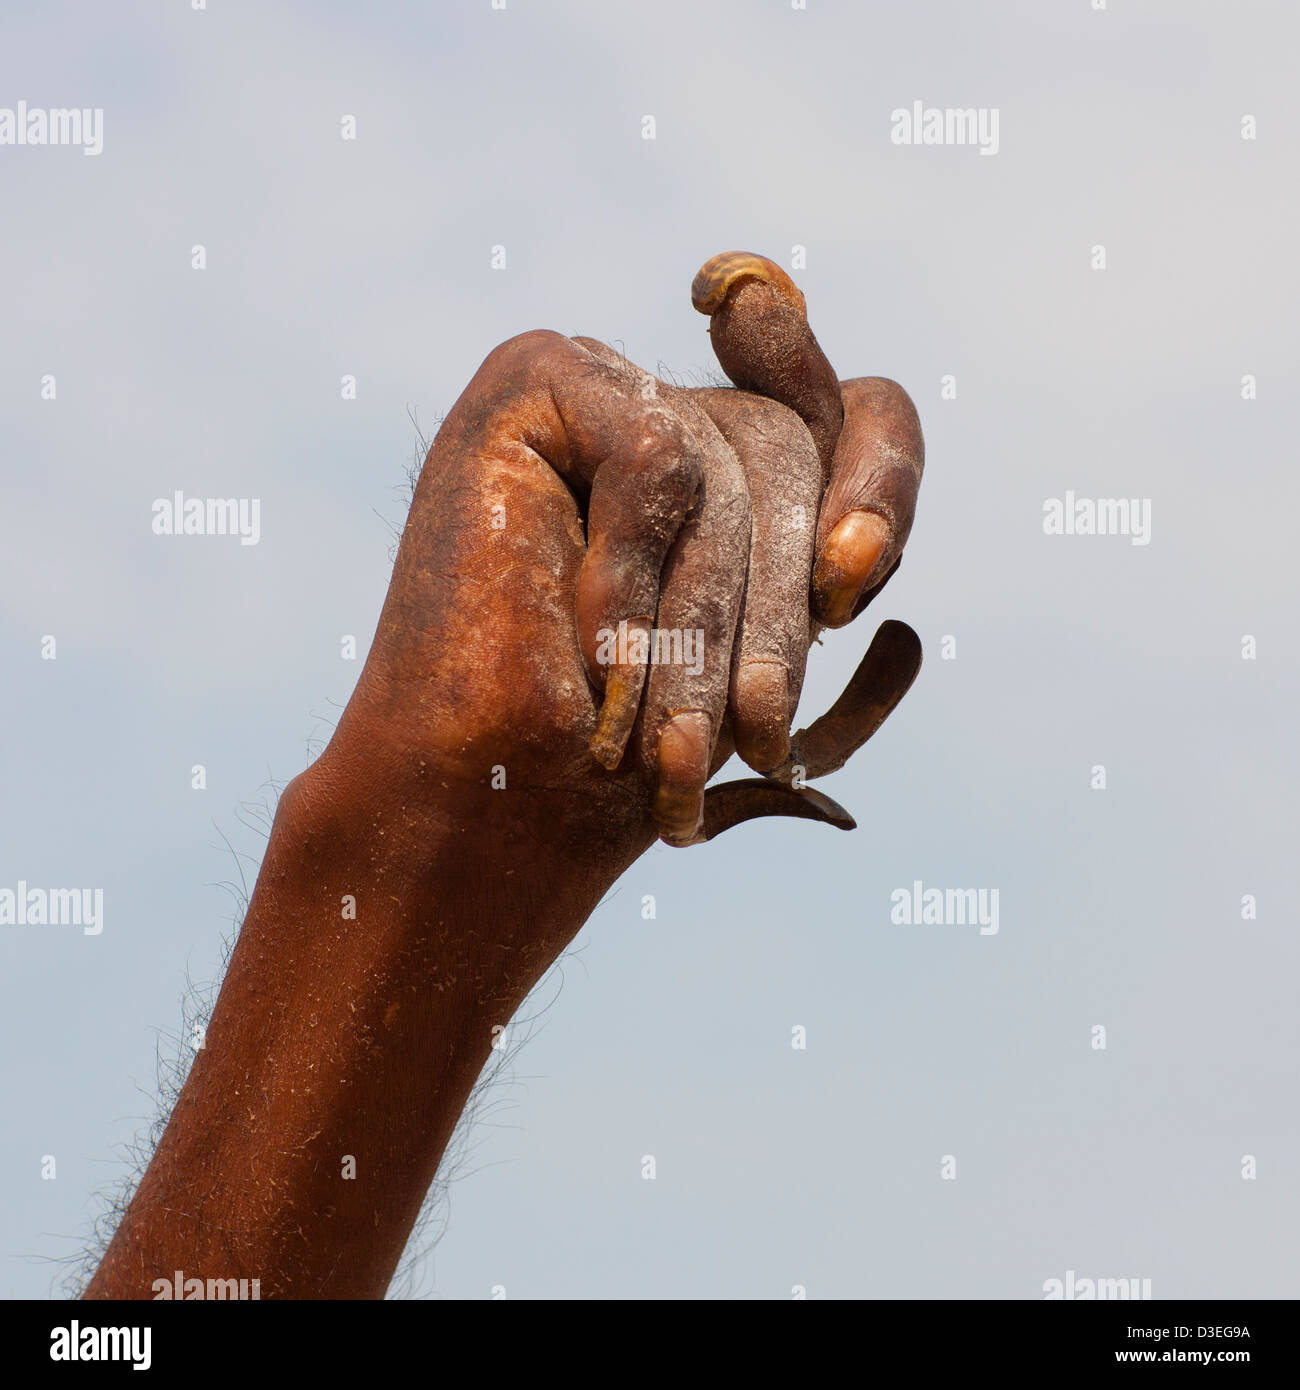 Naga Sadhu Holding His Arm Up, Maha Kumbh Mela, Allahabad, India Stock Photo